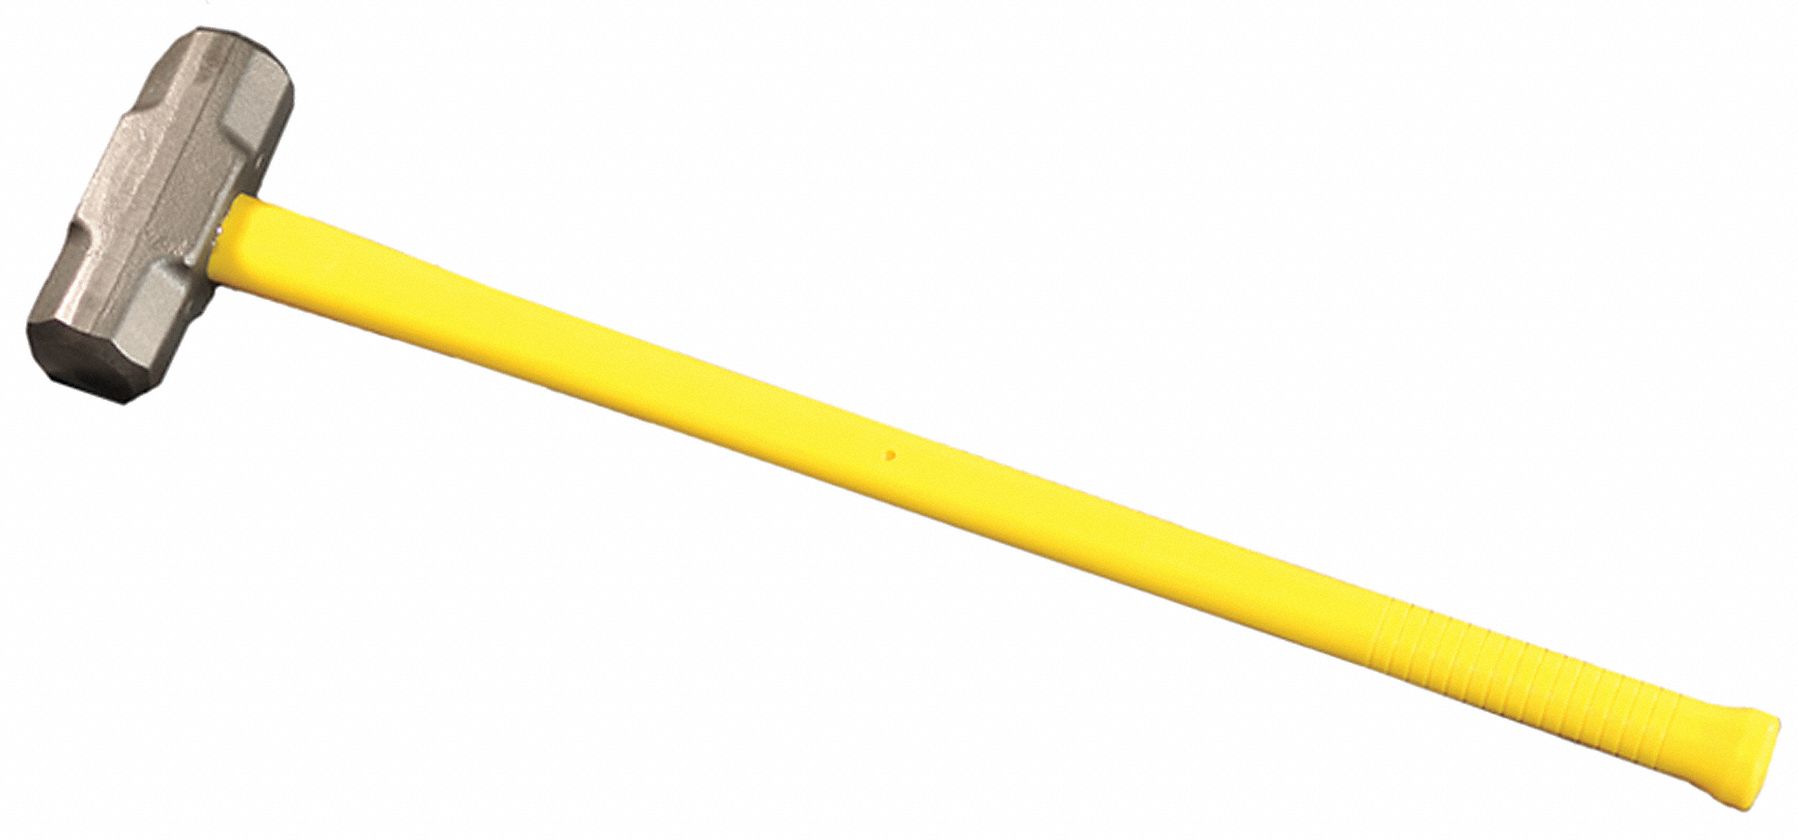 Double Face Sledge Hammer, 16 lb. Head Weight, 2-7/8" Head Width, 34" Overall Length